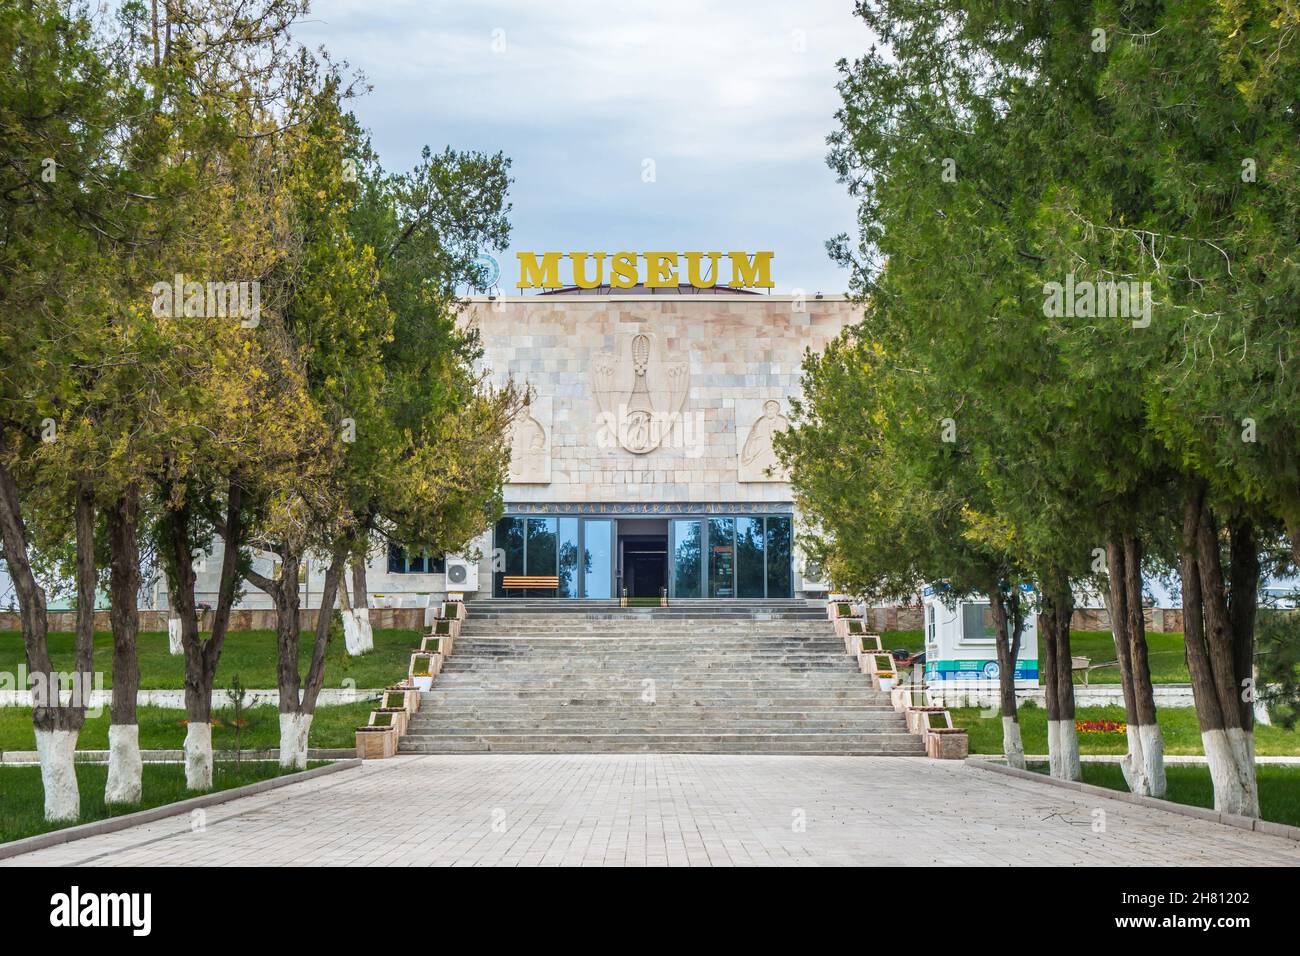 Facade of Afrasiab museum in Samarkand, Uzbekistan. Inscription above doorway translates as 'Museum of History of Samarkand' Stock Photo